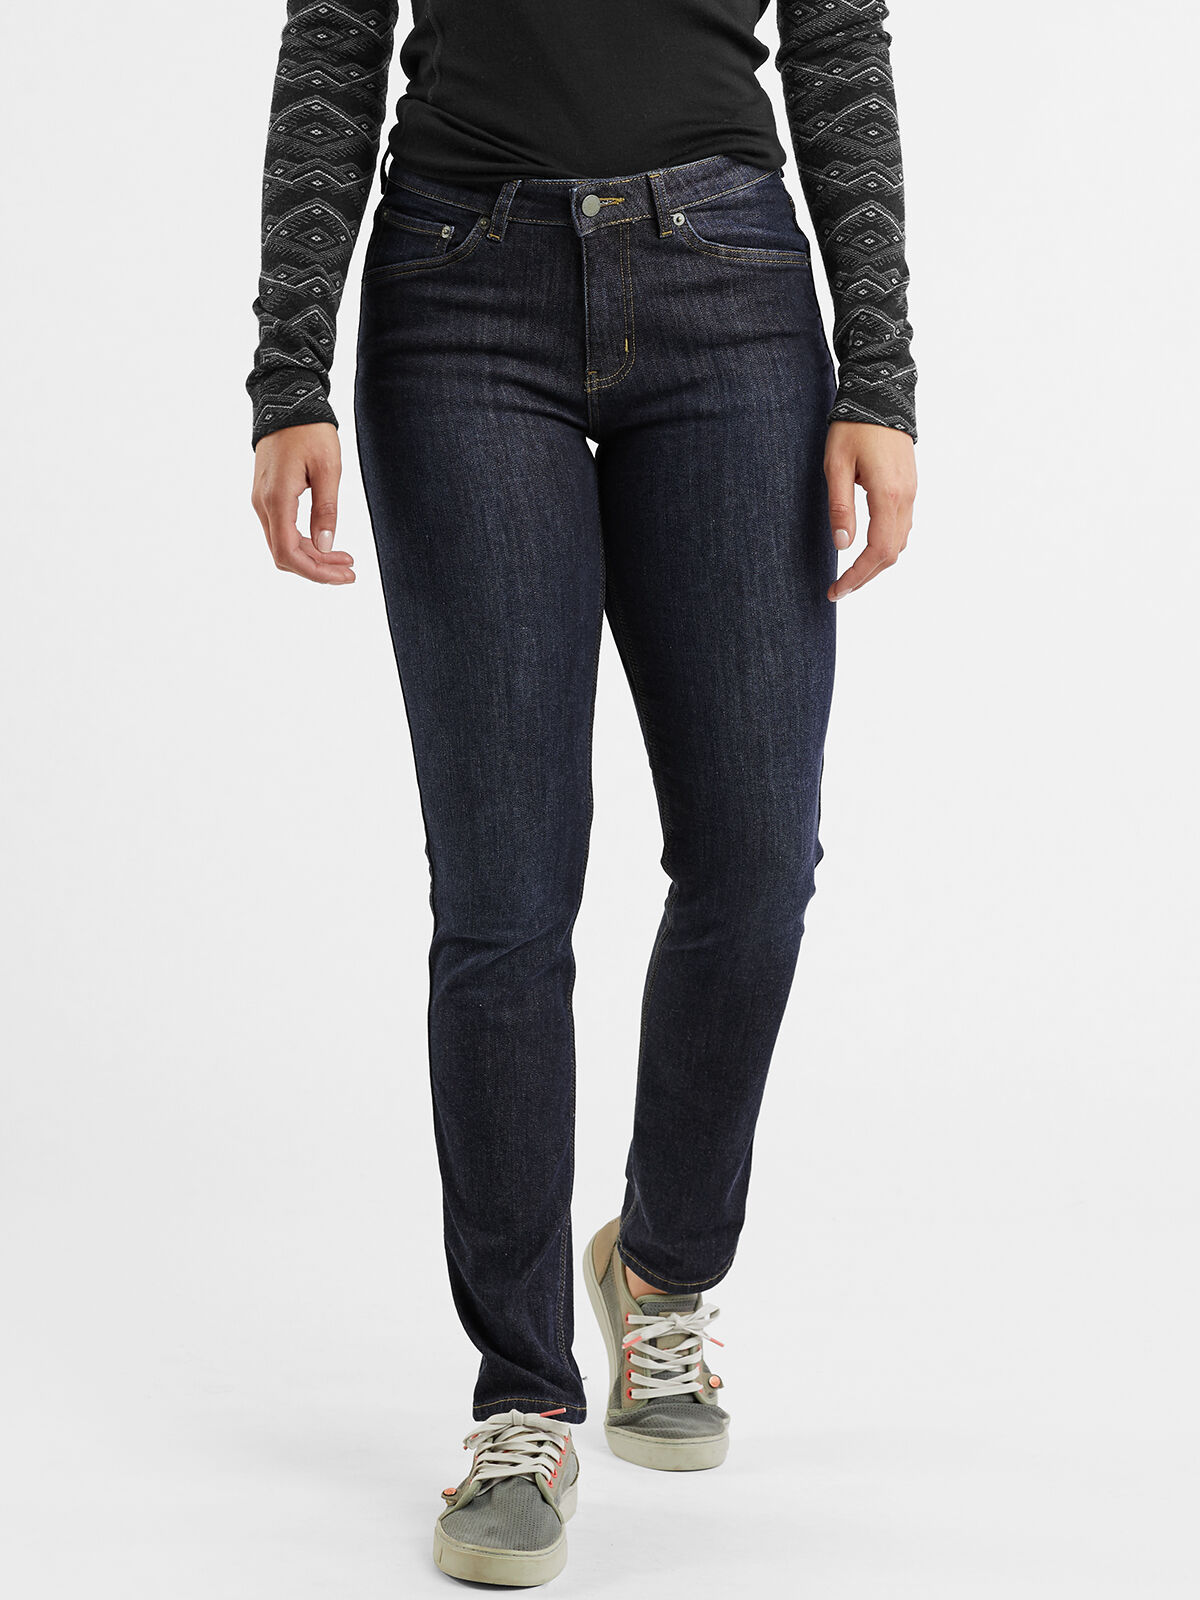 Smiths Mens Blue Workwear Denim Jeans size 40/32 Fleece Lined Denim Jeans  NWT | eBay